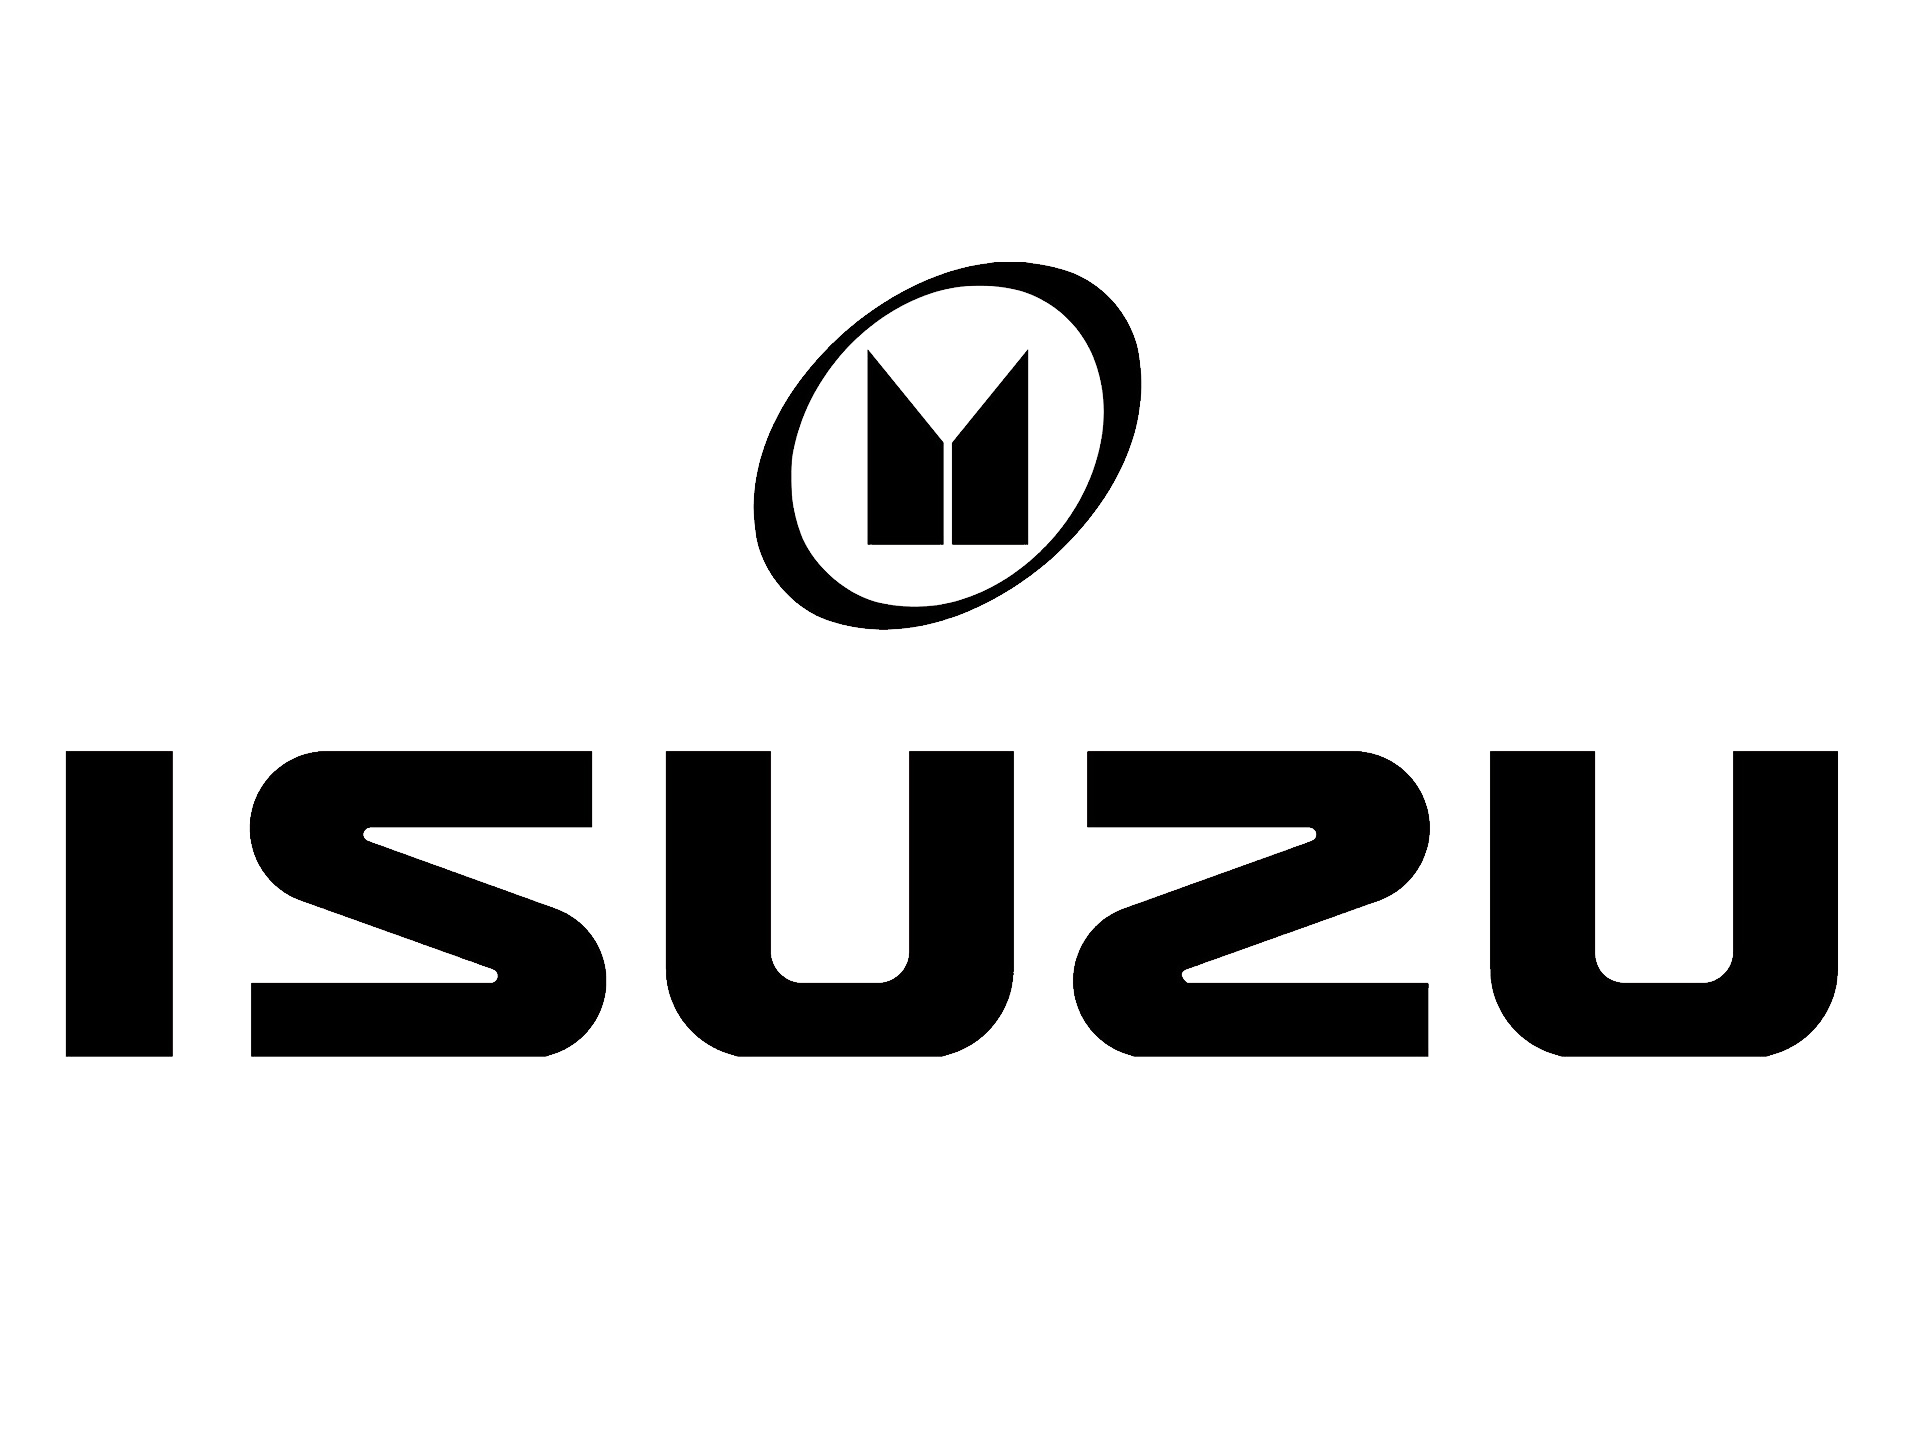 Isuzu logosu